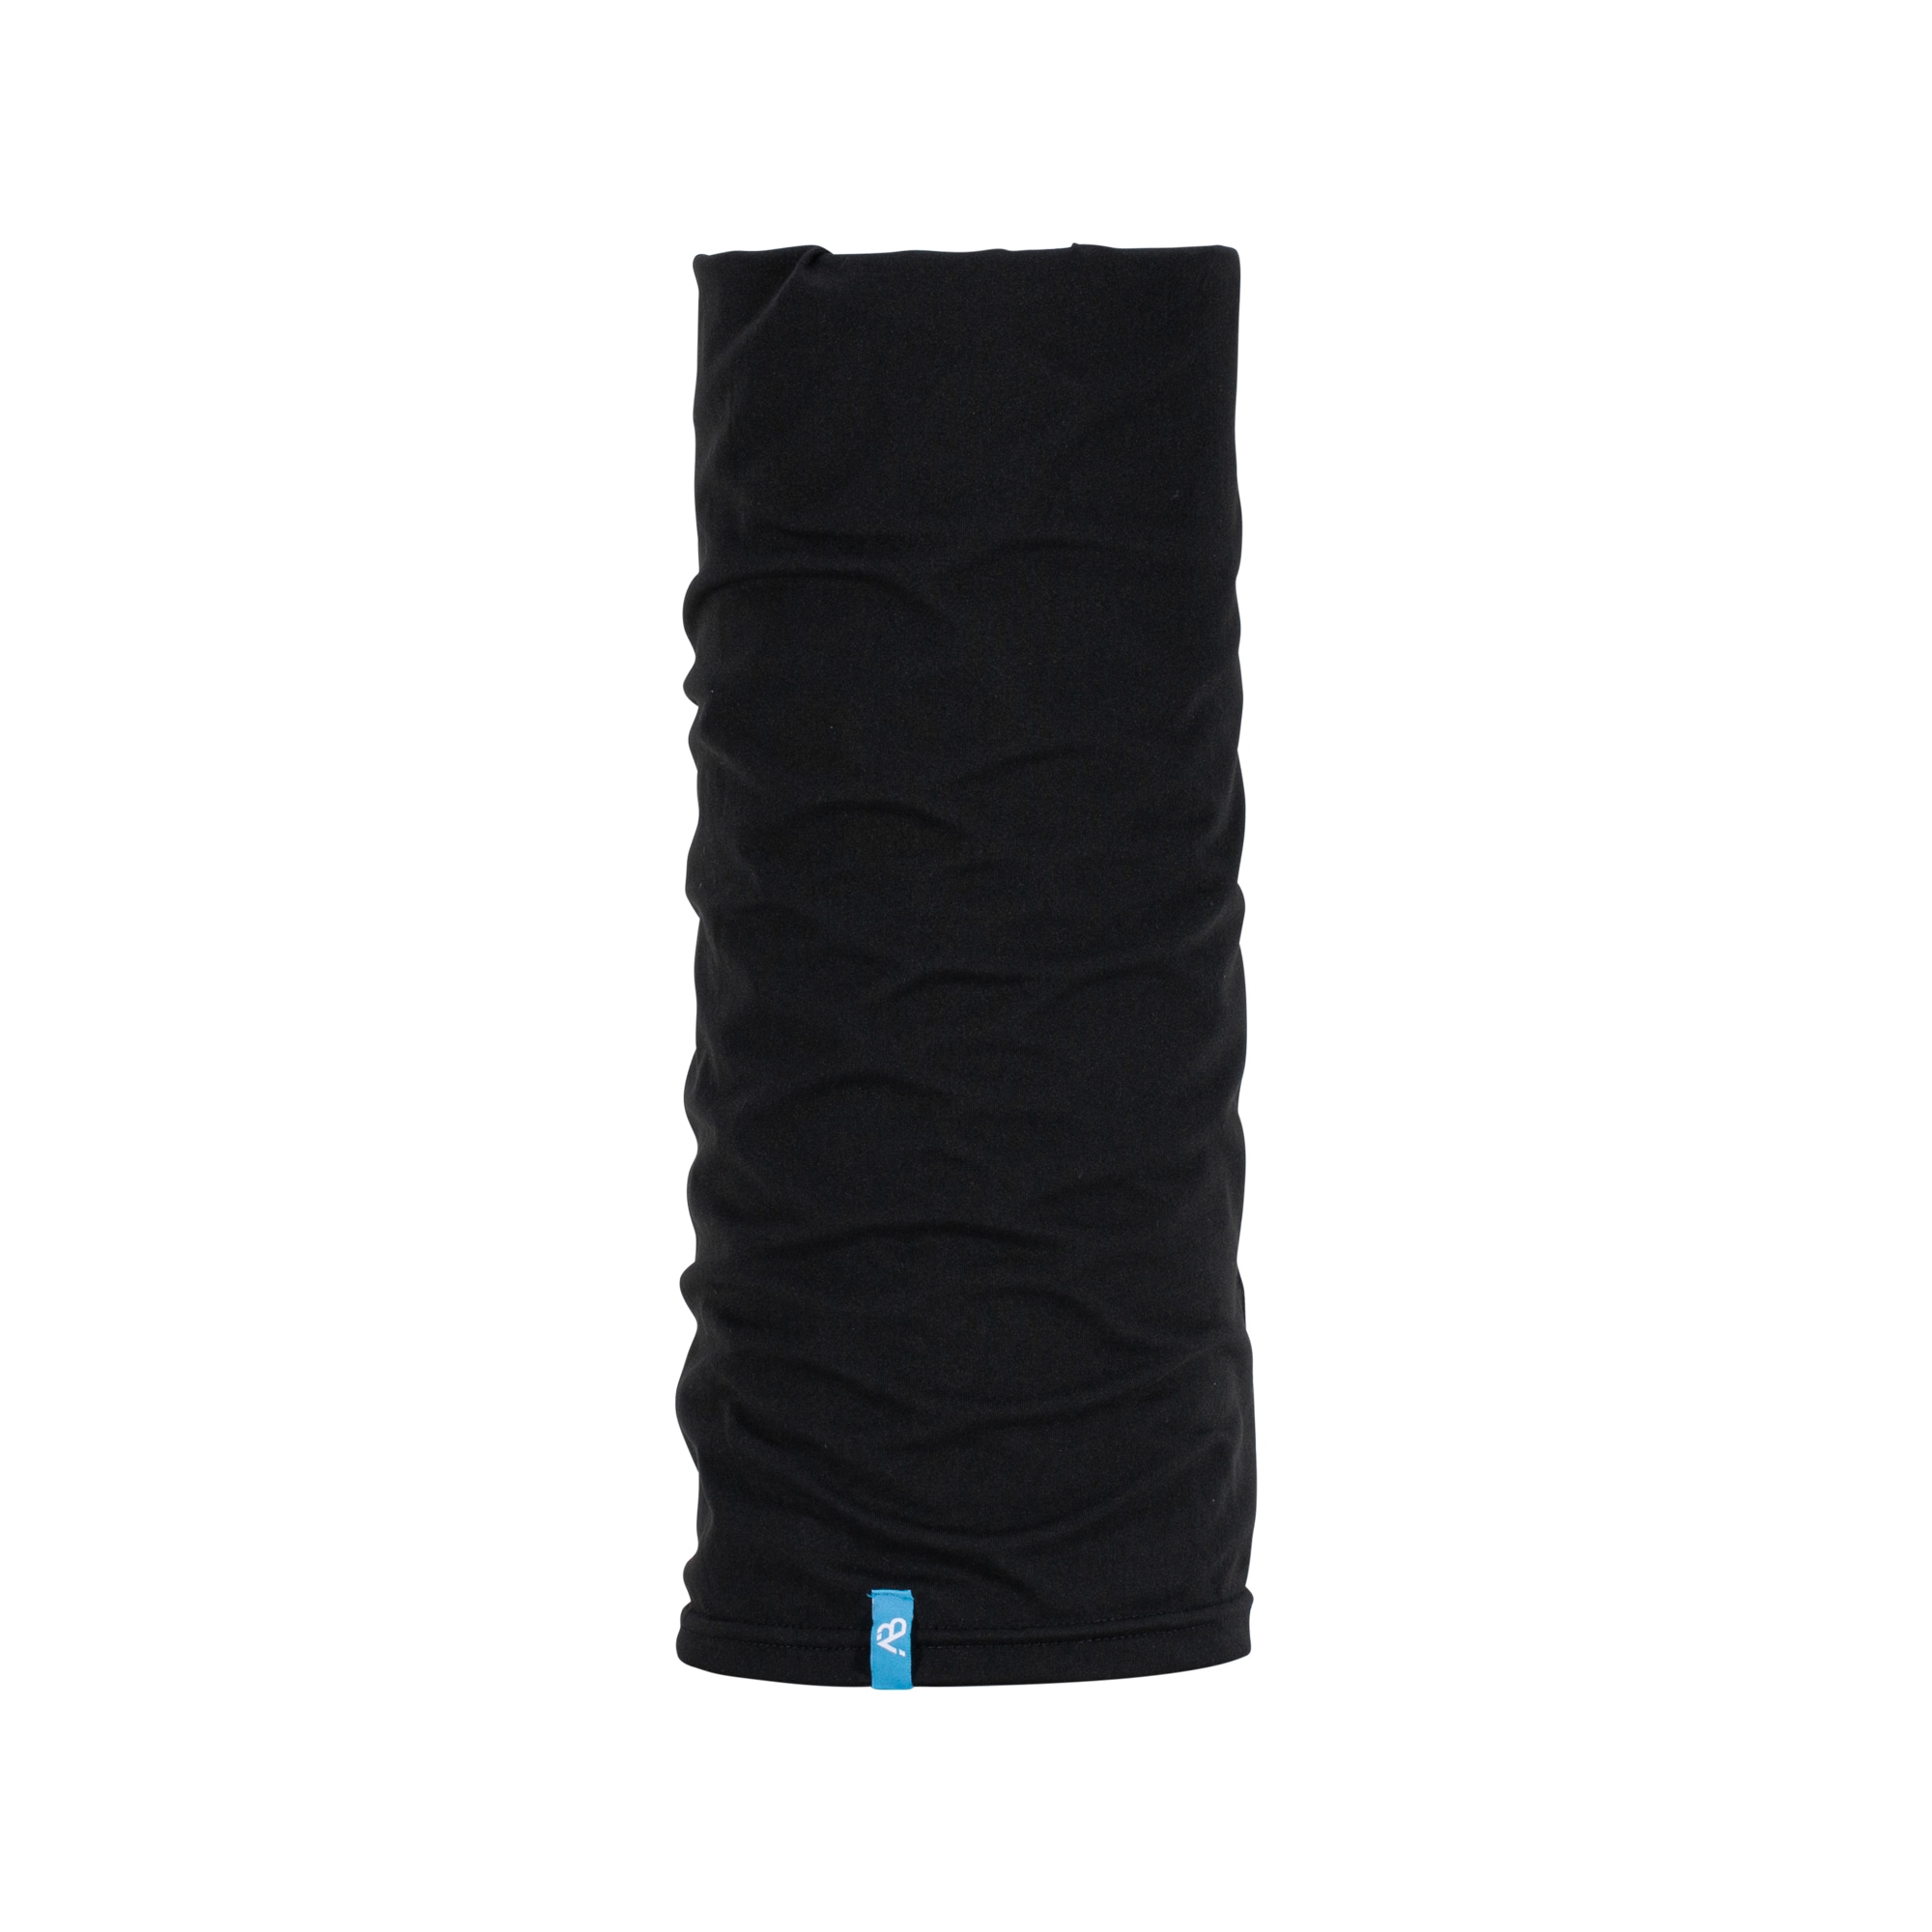 Purchase the Tubular Cloth Sport Logo black by ASMC